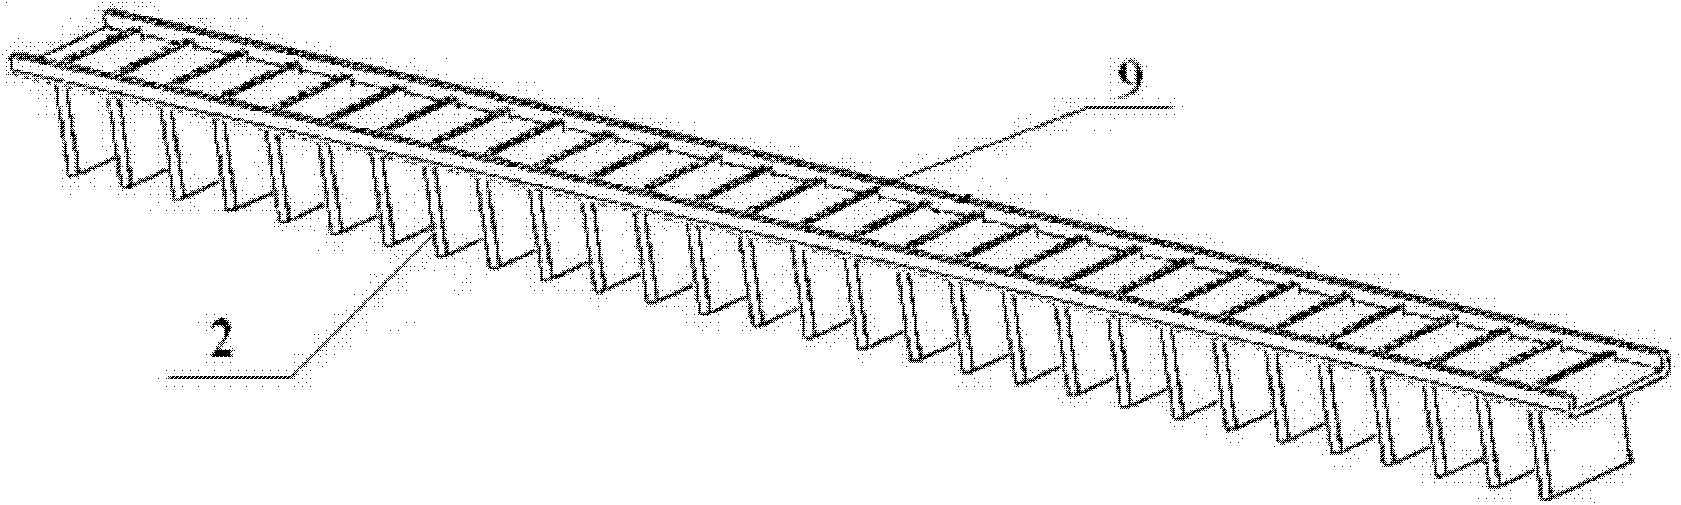 Micro-channel parallel flow evaporator